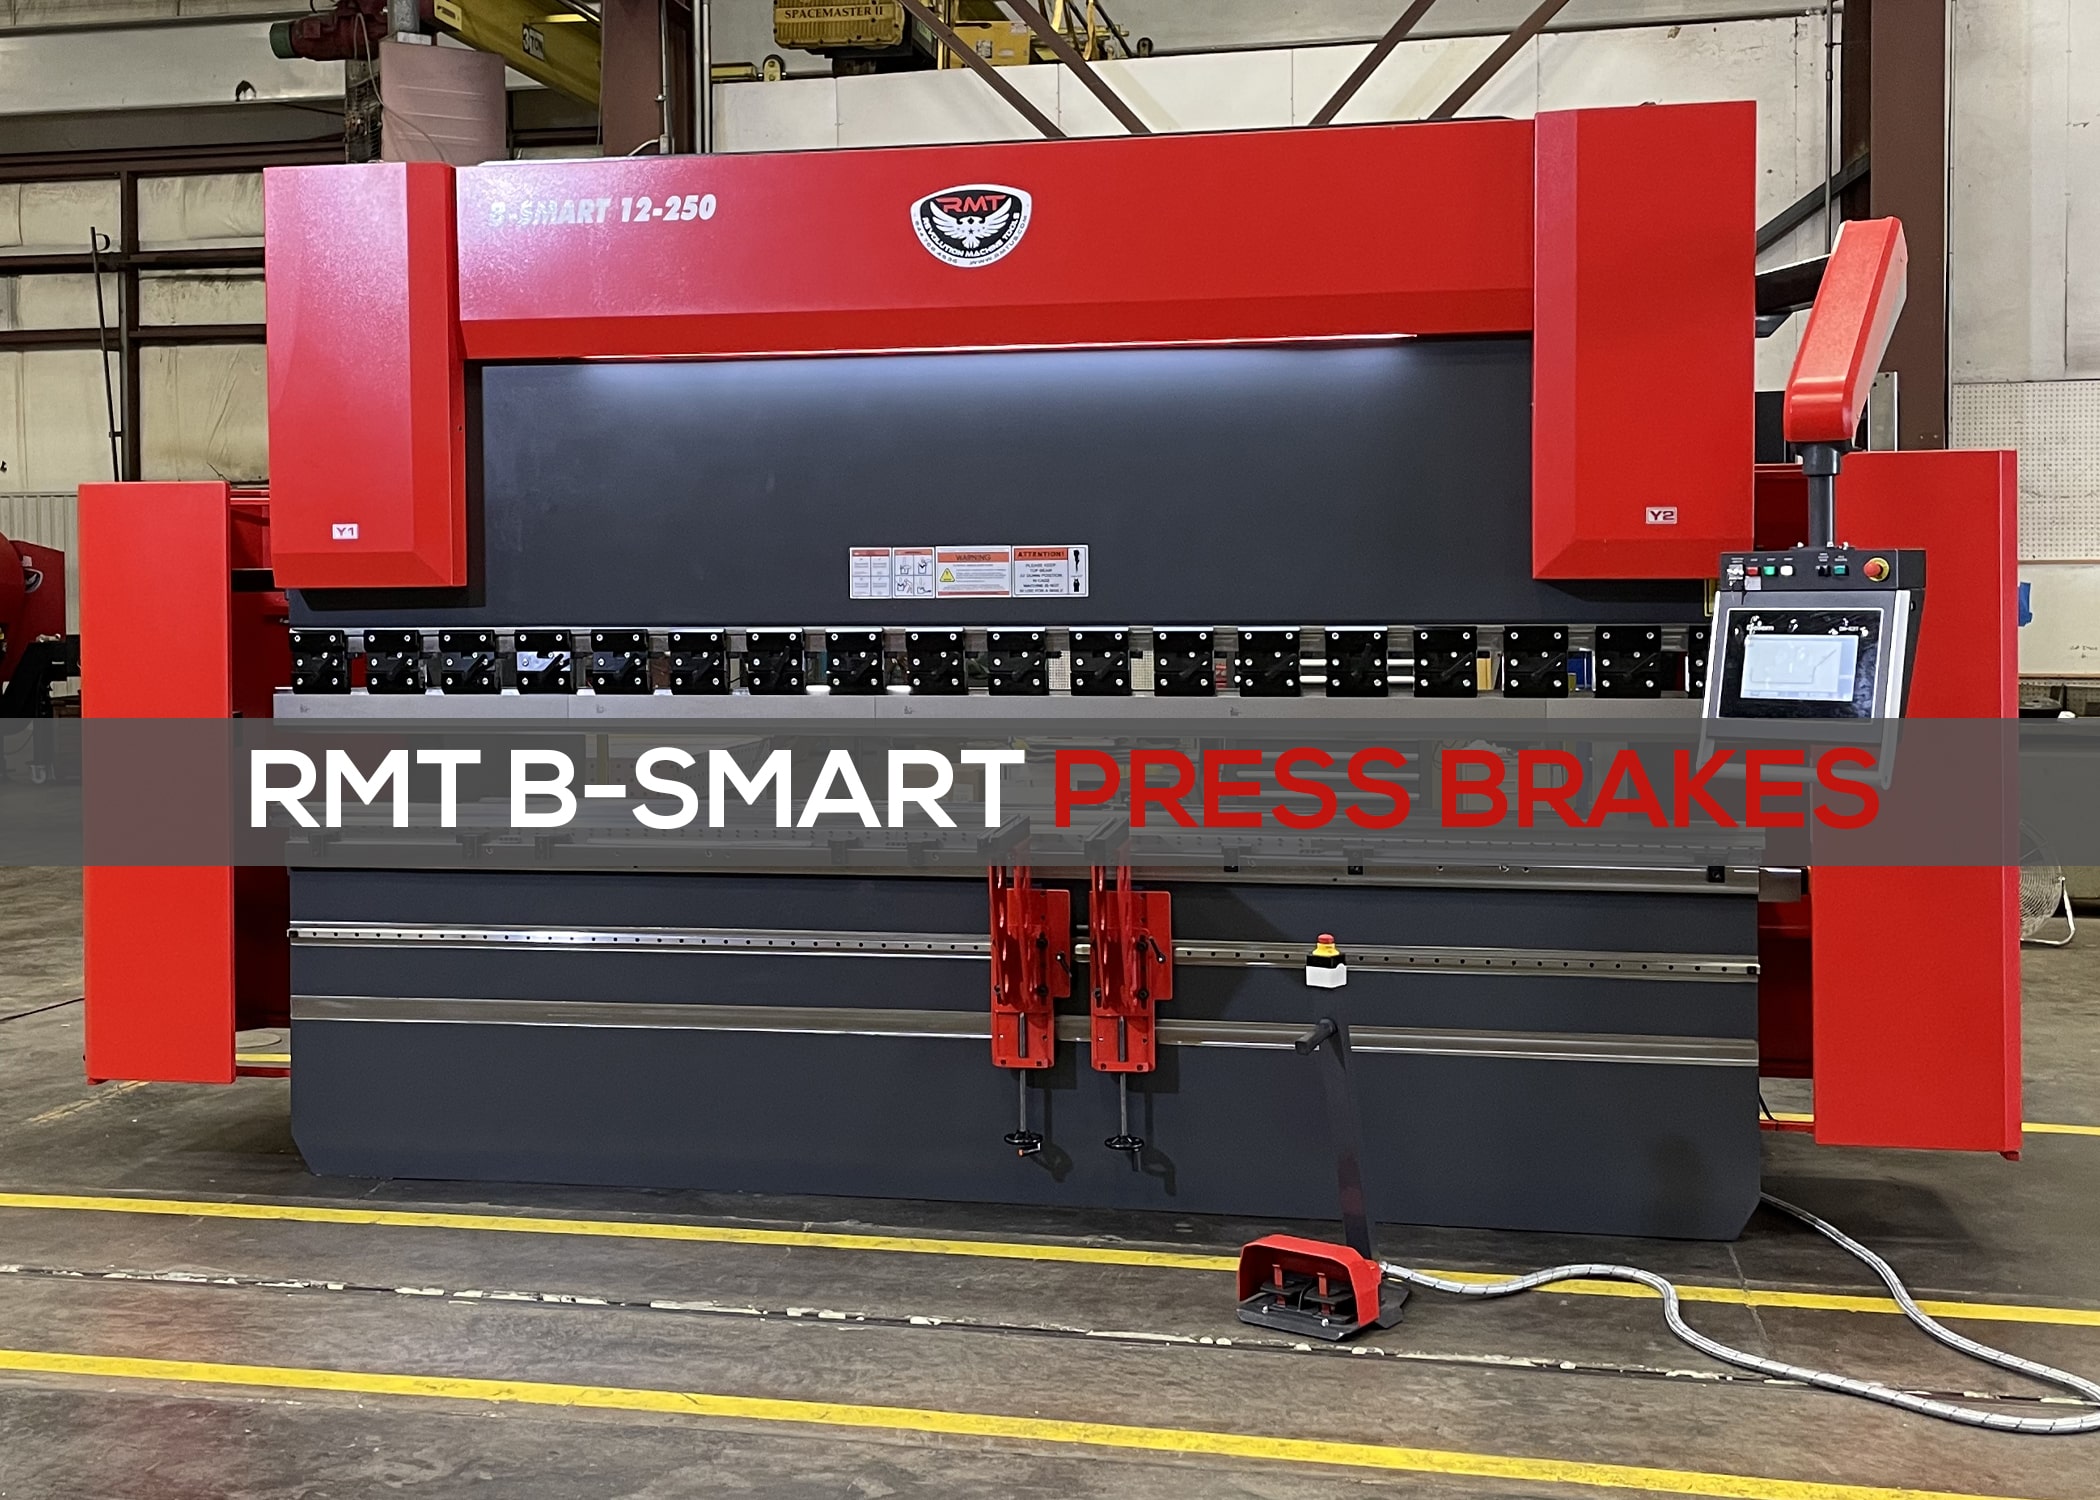 RMT B-SMART Press Brakes Featured